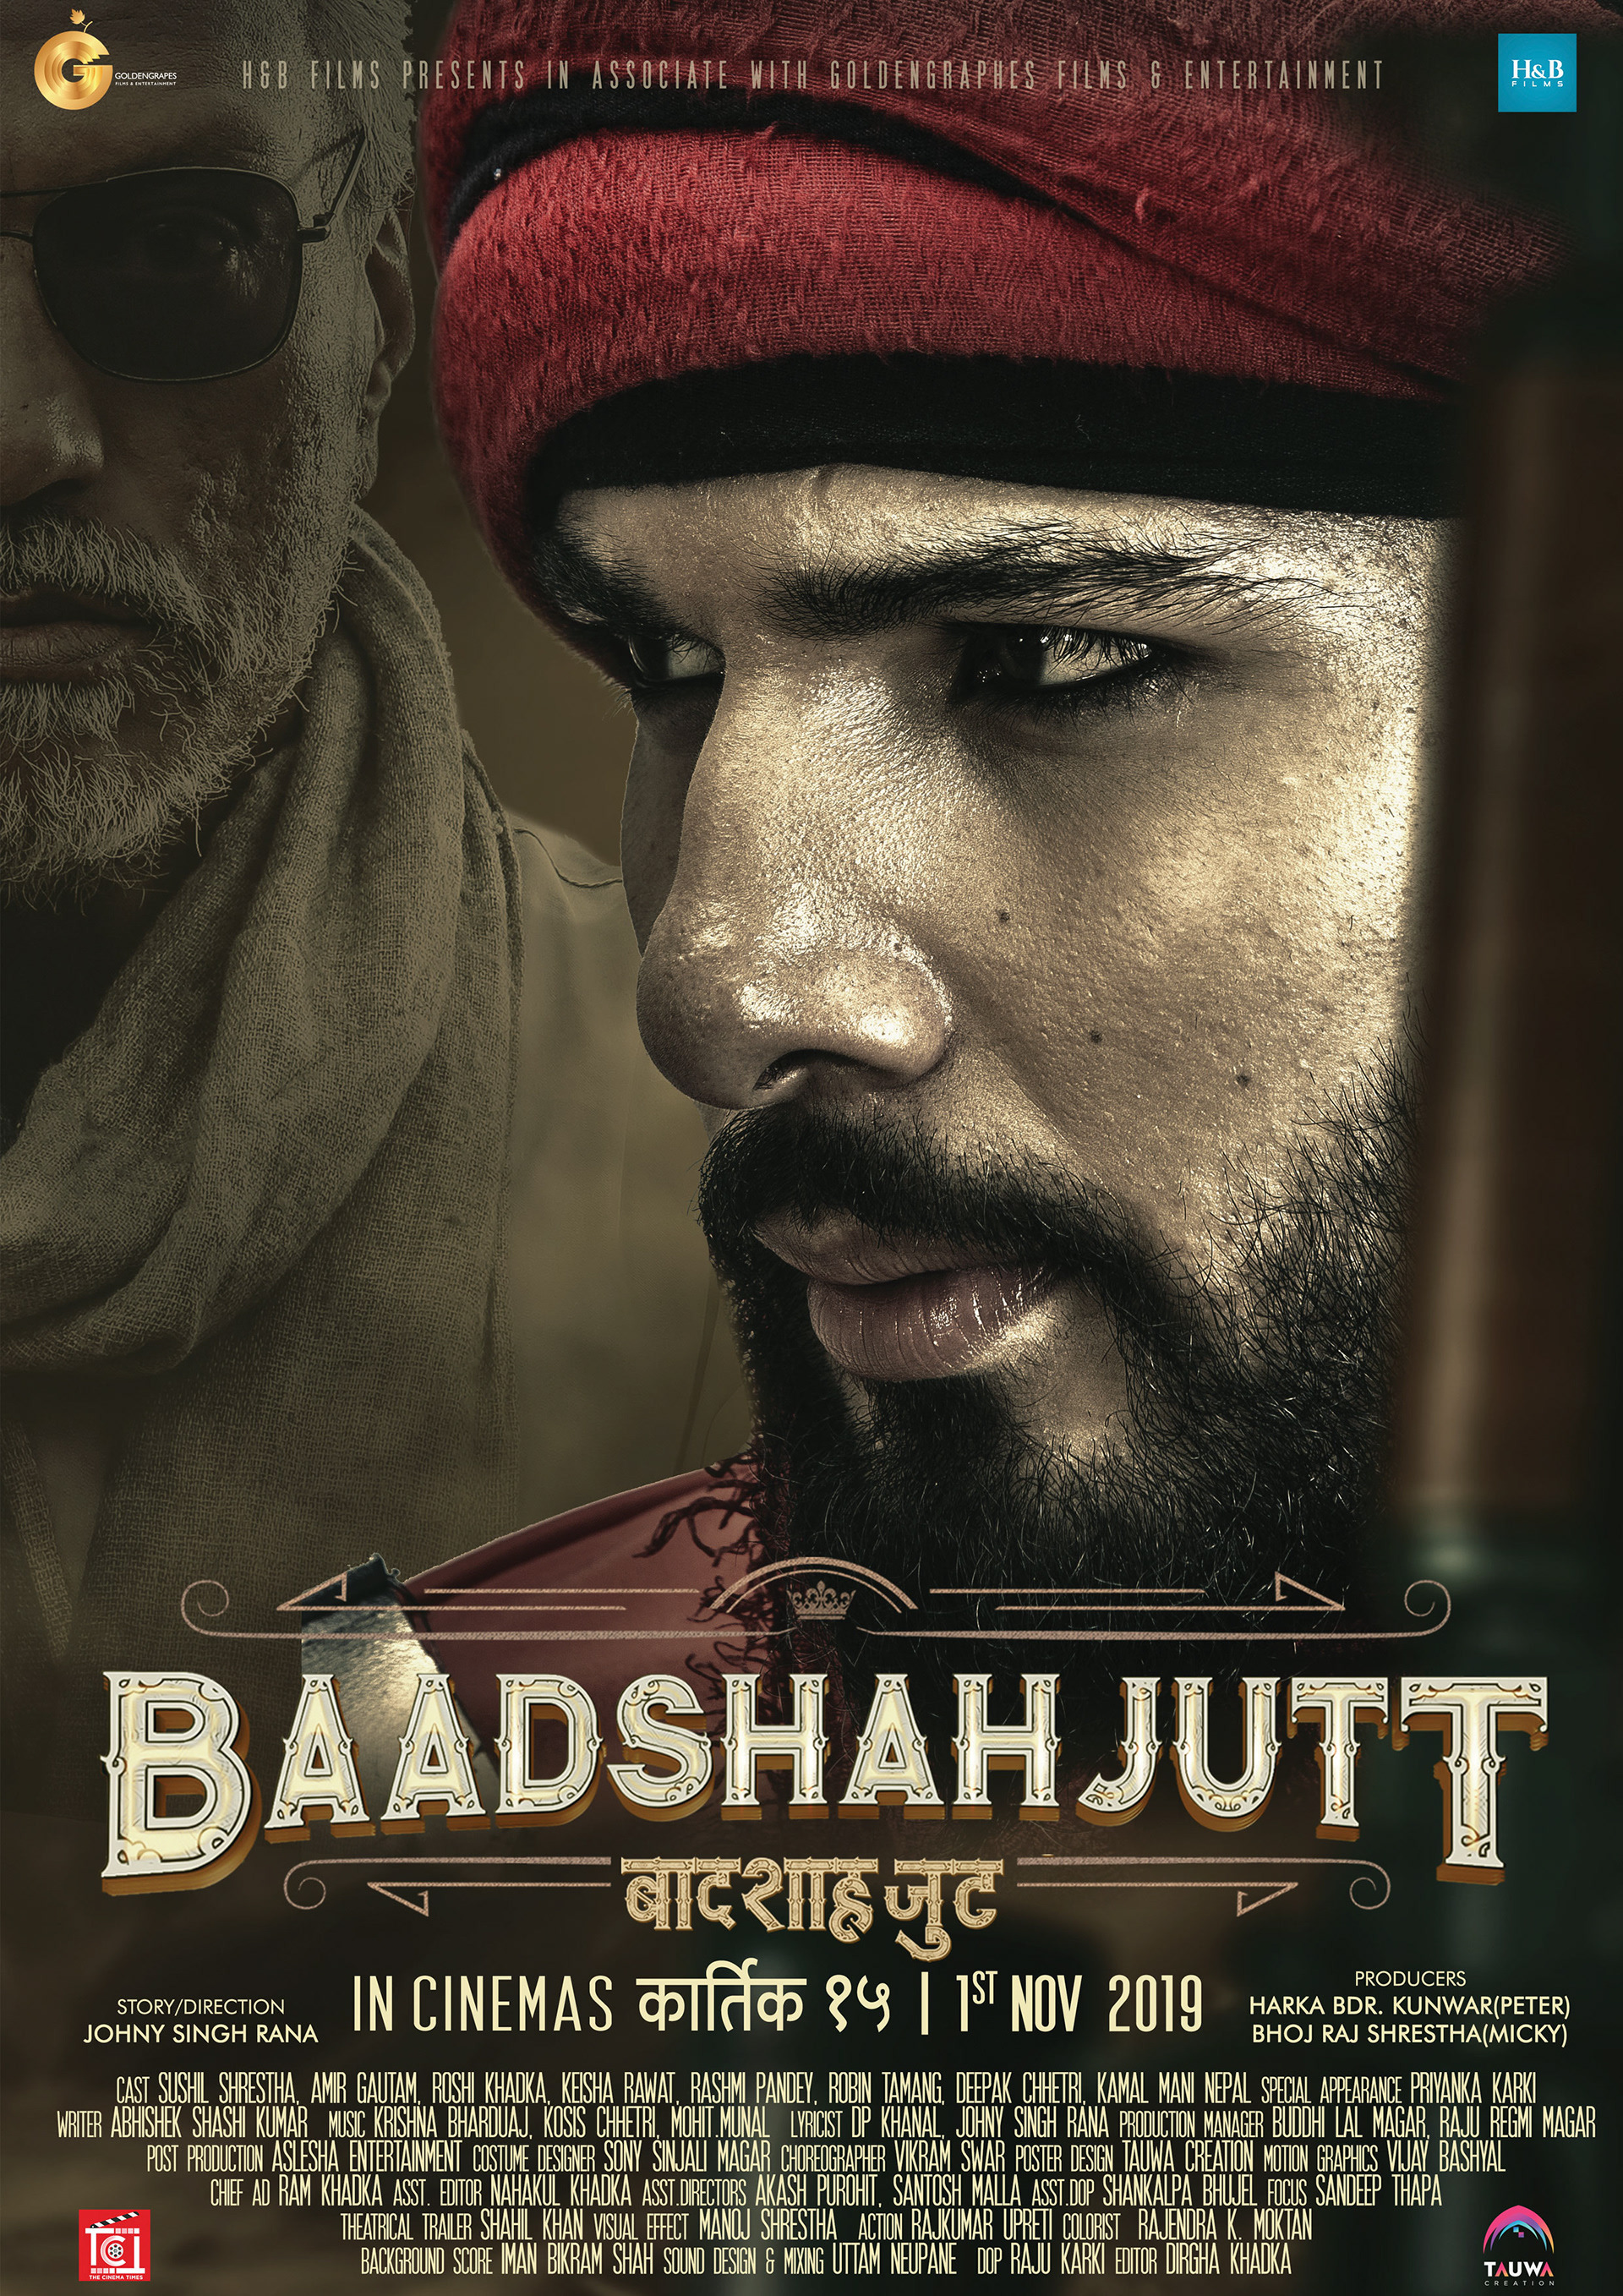 Mega Sized Movie Poster Image for Baadshah Jutt (#1 of 2)